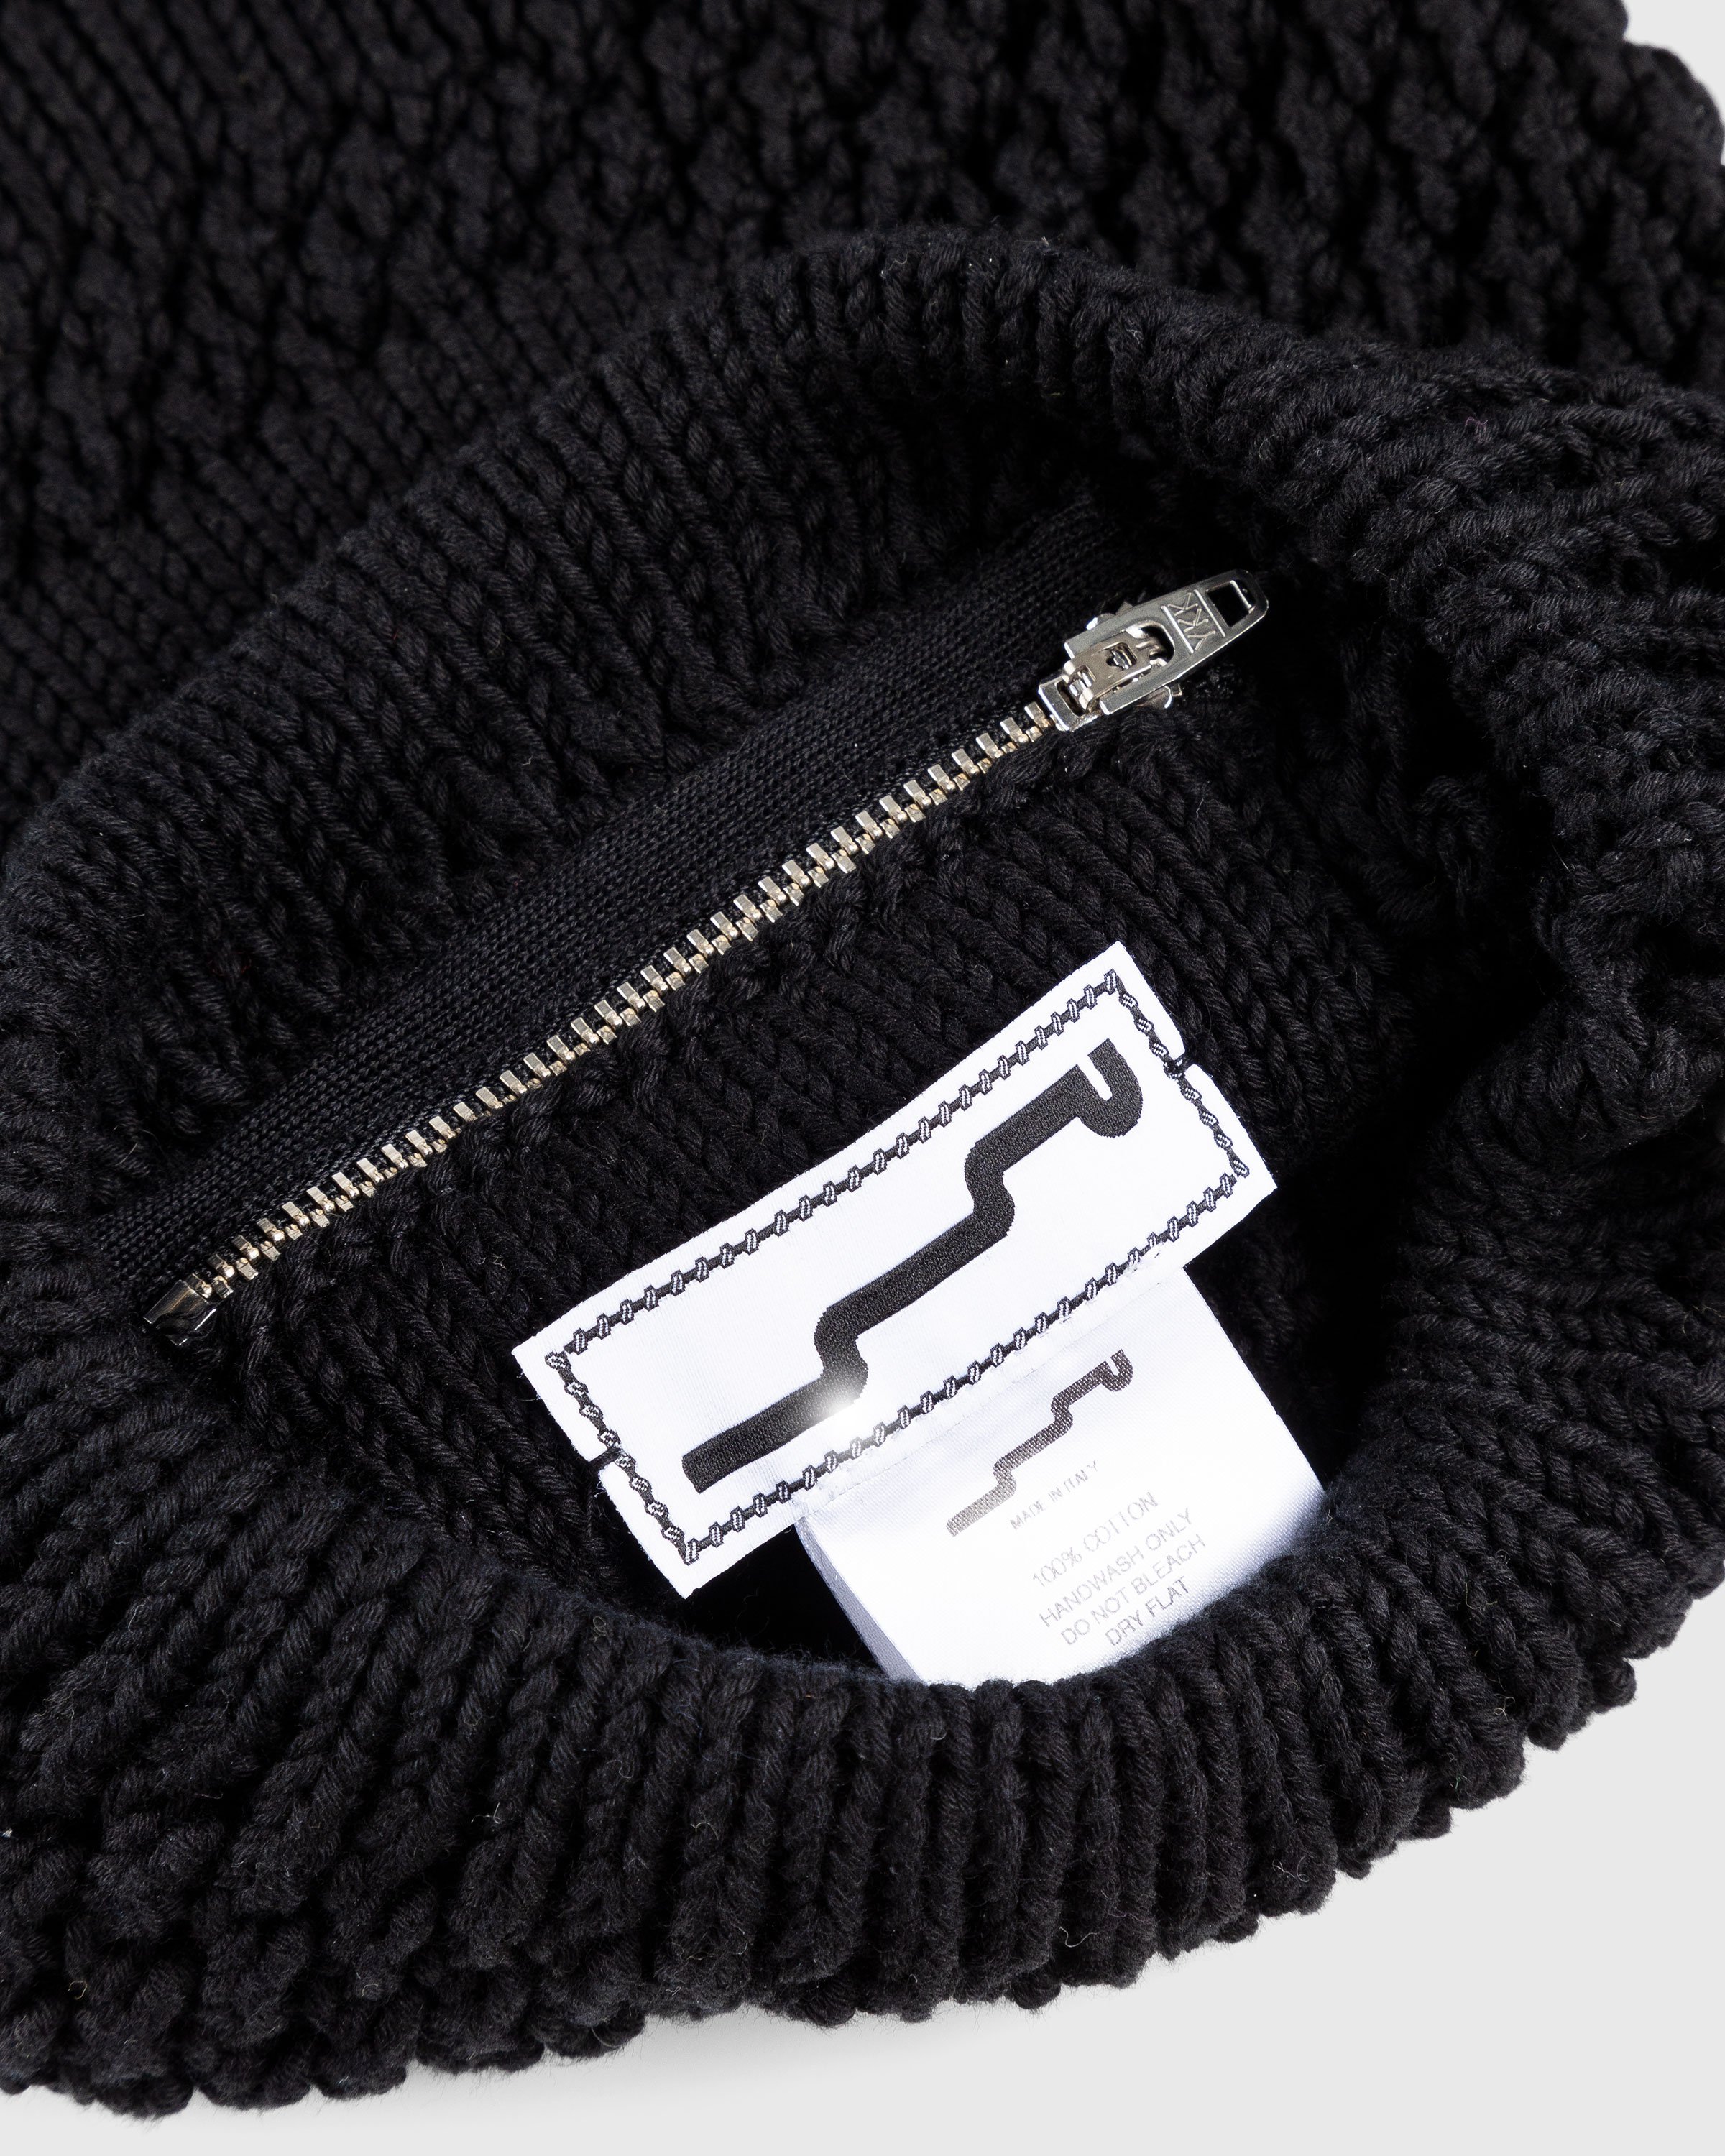 SSU - Mesh Stitch Knitted Bag Black - Accessories - Black - Image 4